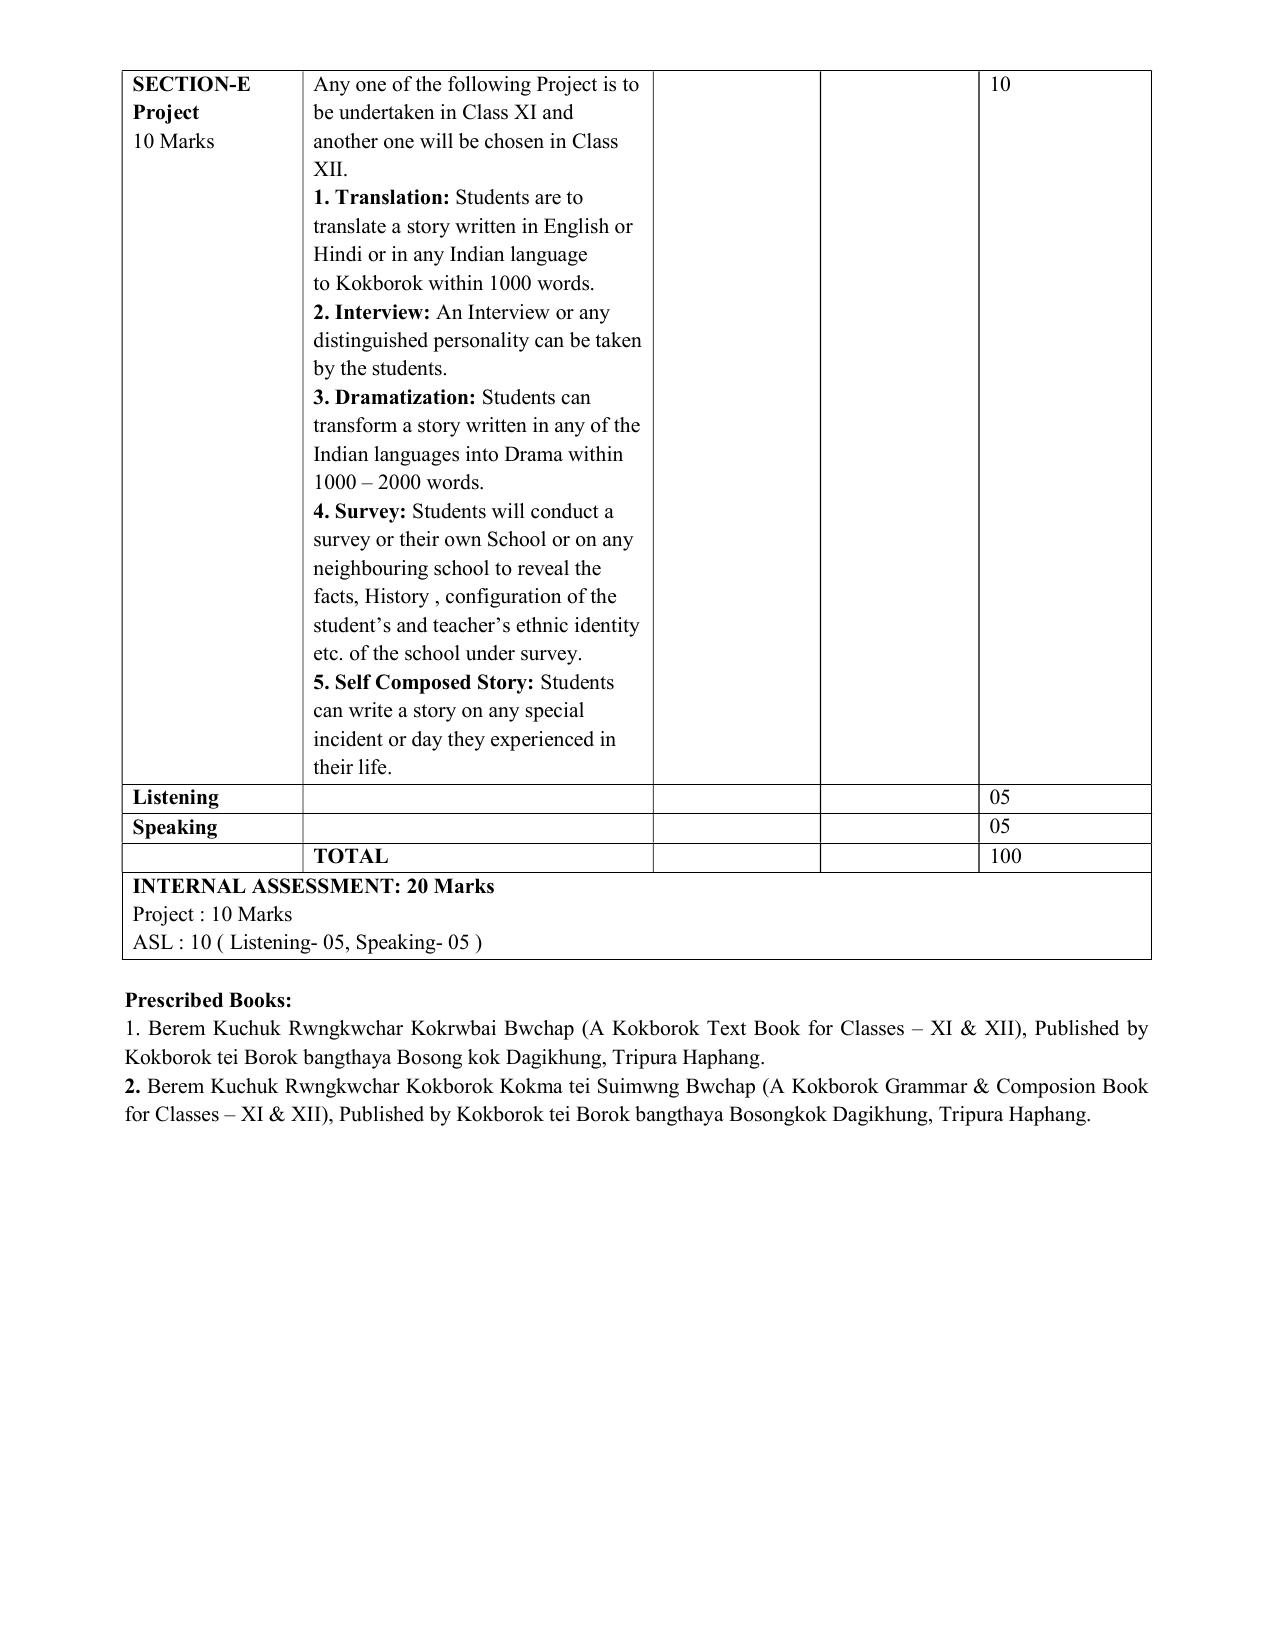 CBSE Class XI & XII Kokborok Syllabus - Page 9